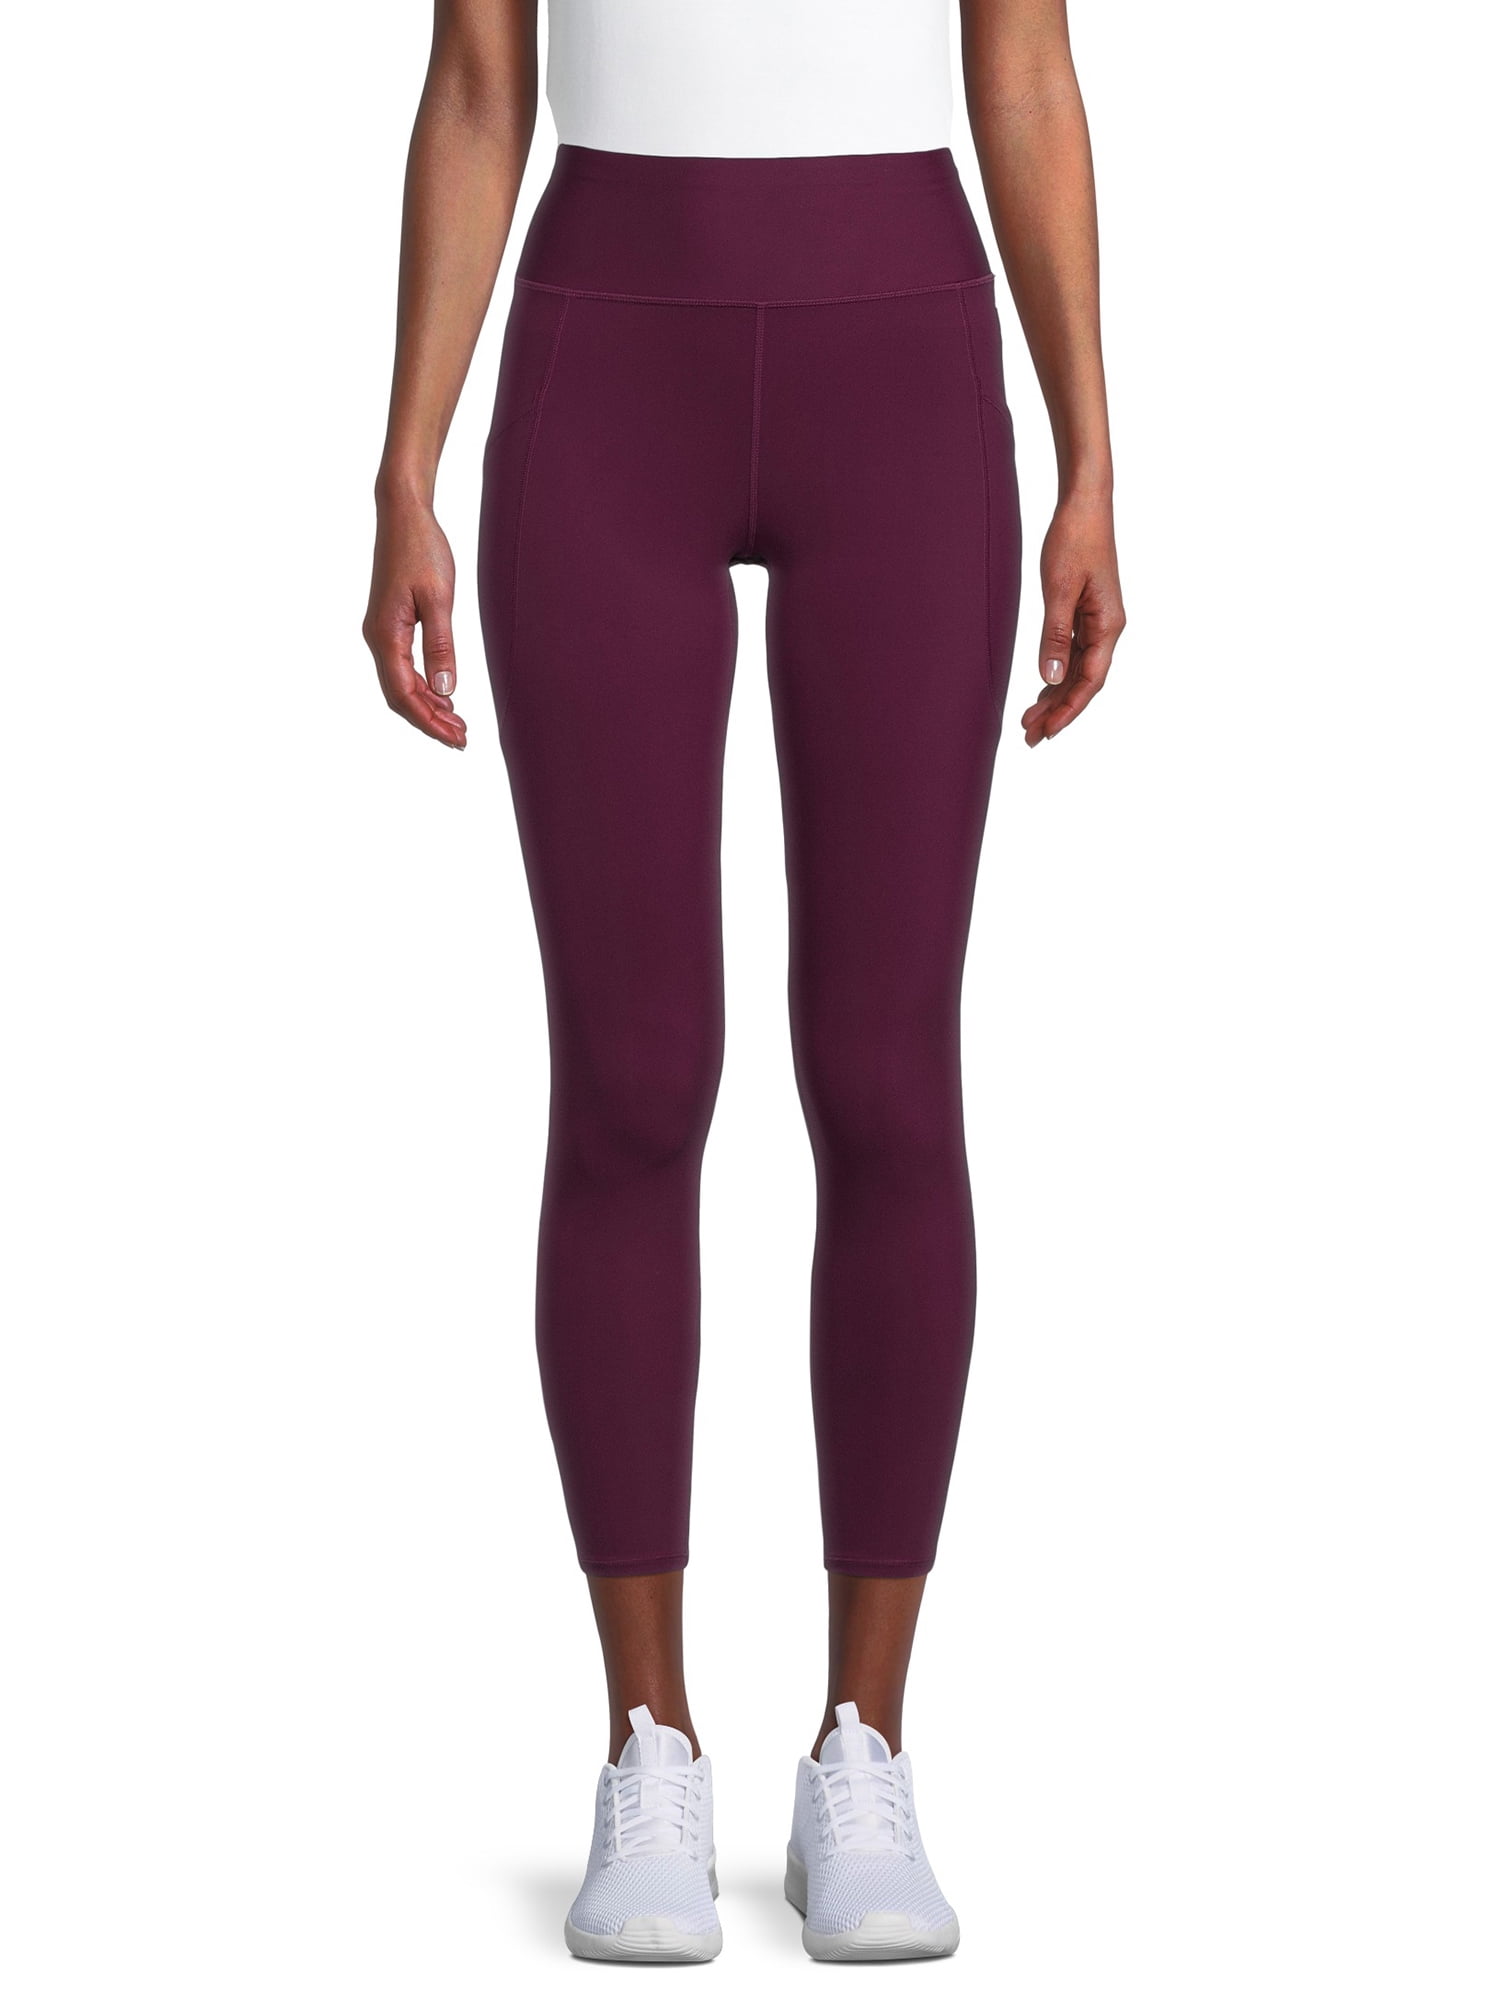 AVIA FLEX-TECH Women's 7/8ths Length Leggings (Purple Oxford, Large) at   Women's Clothing store